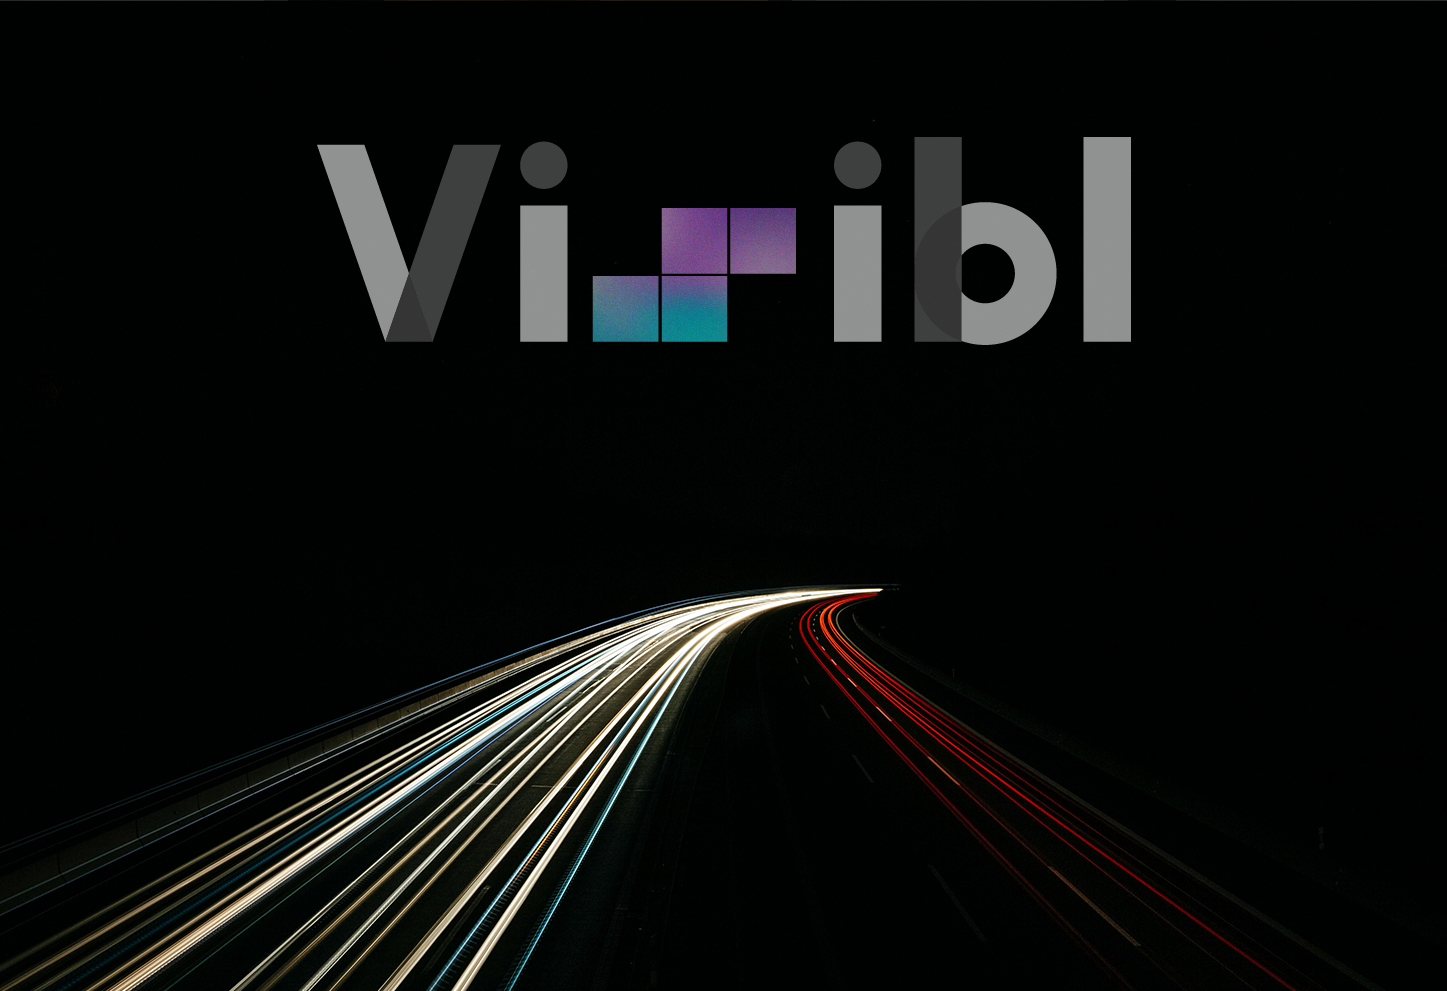 Visibl Textual Logo